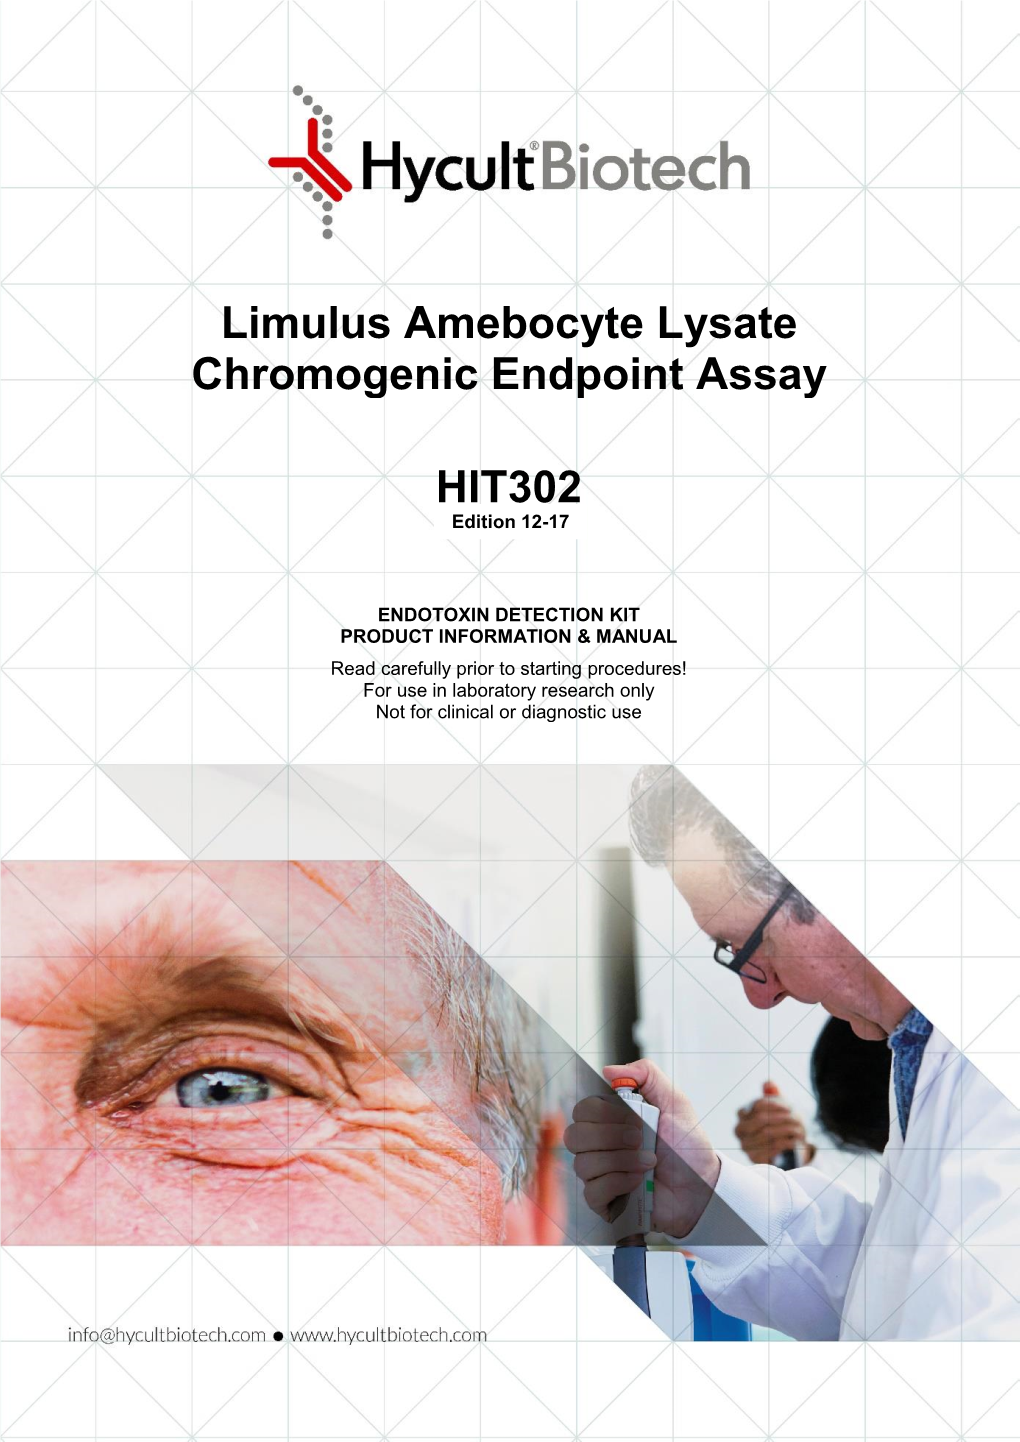 Limulus Amebocyte Lysate Chromogenic Endpoint Assay HIT302